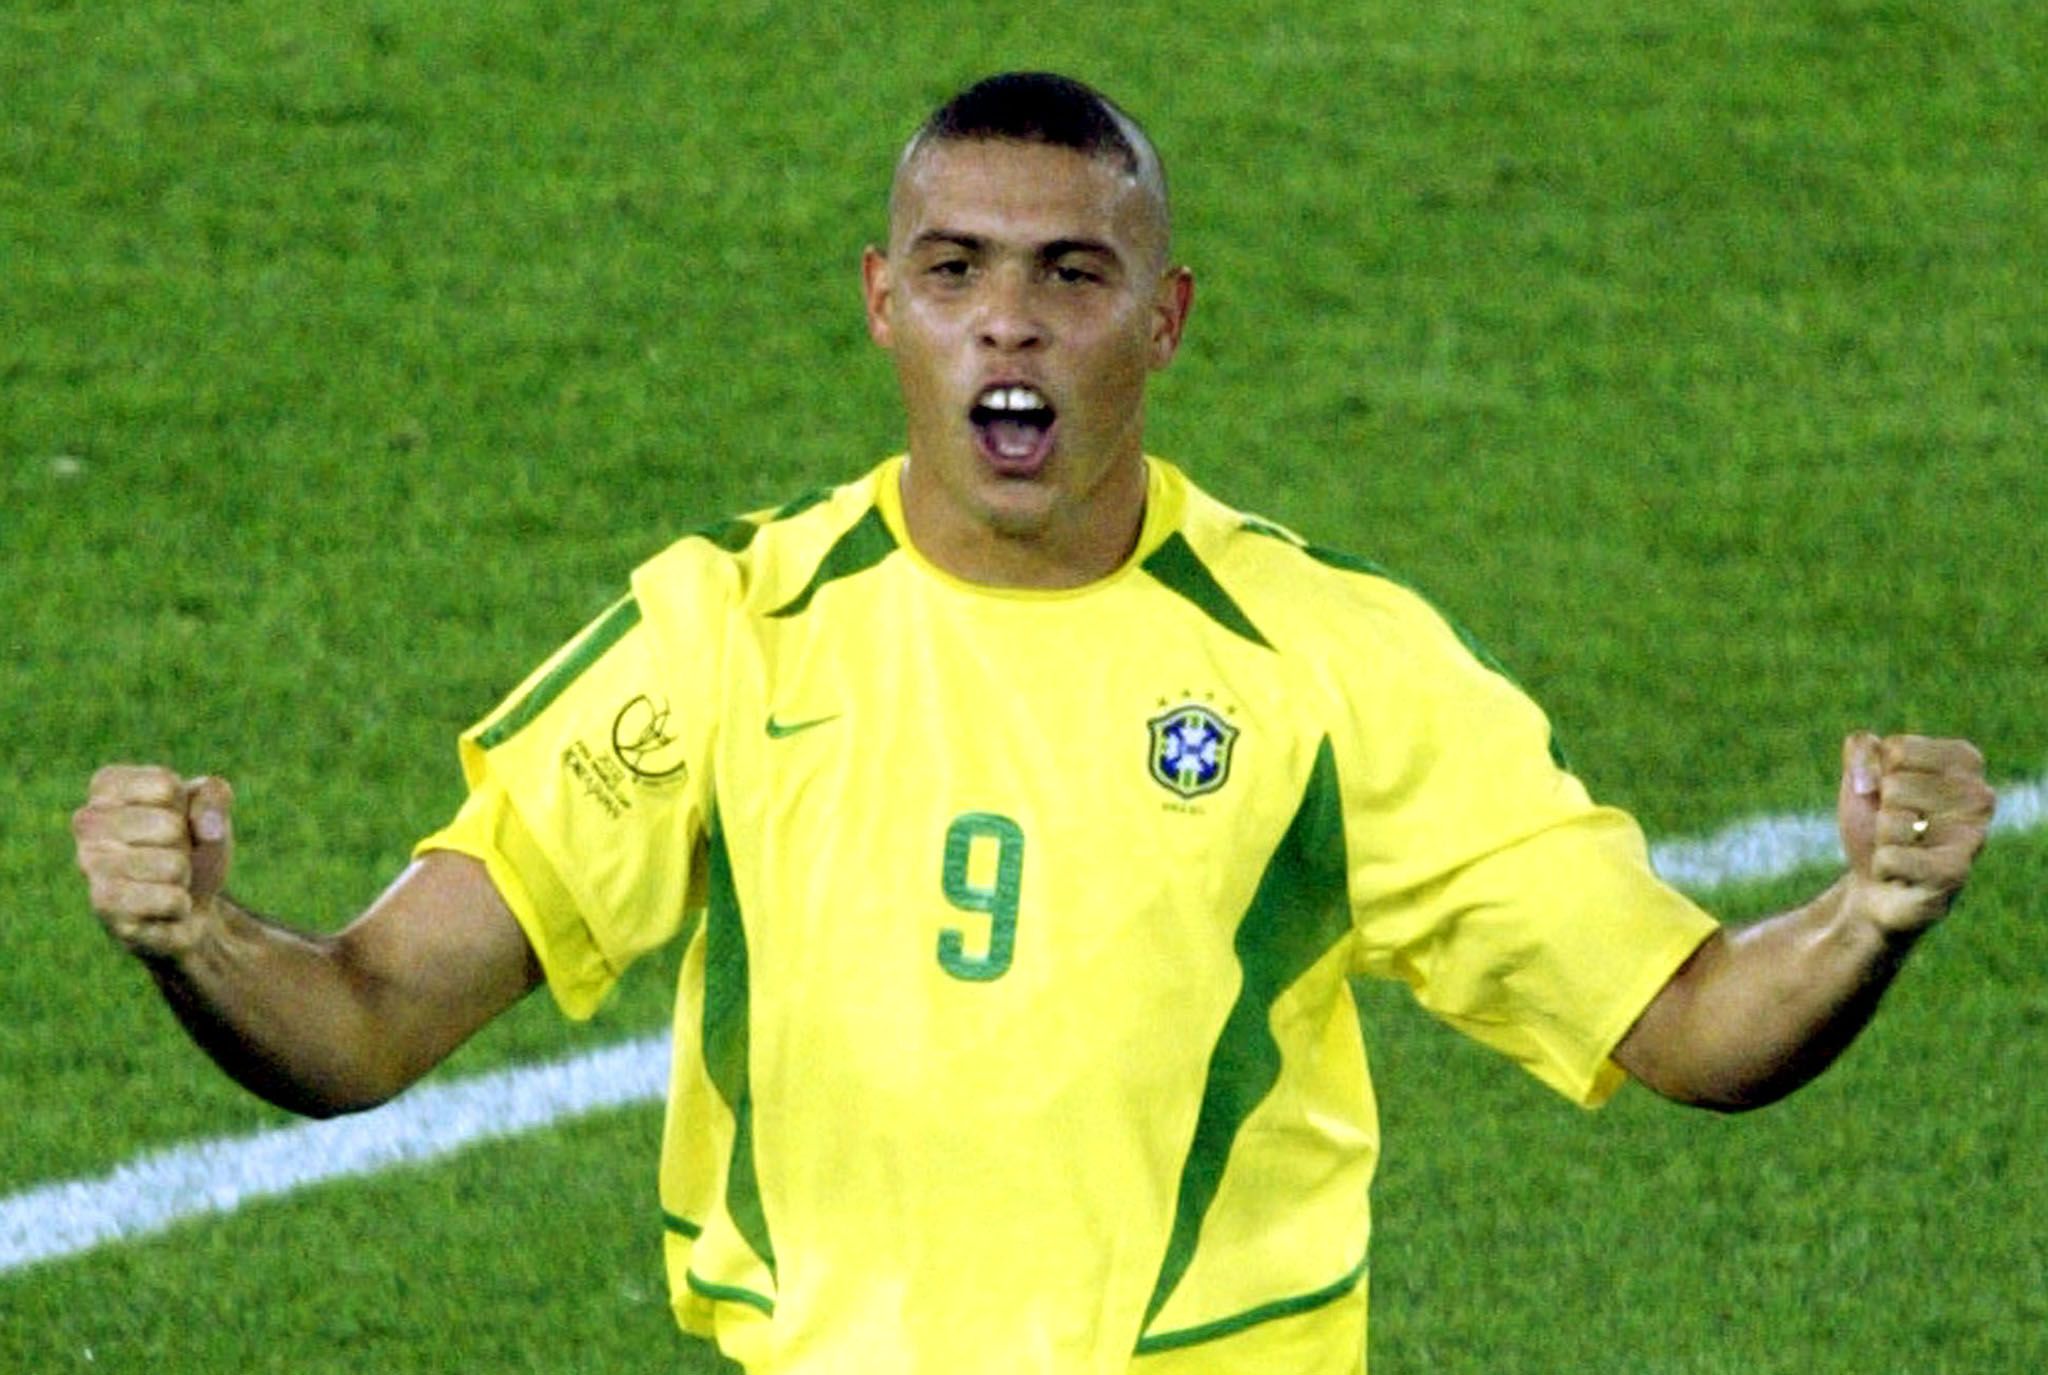 Ronaldo: Brazil legend's beautiful rebirth at the 2002 World Cup